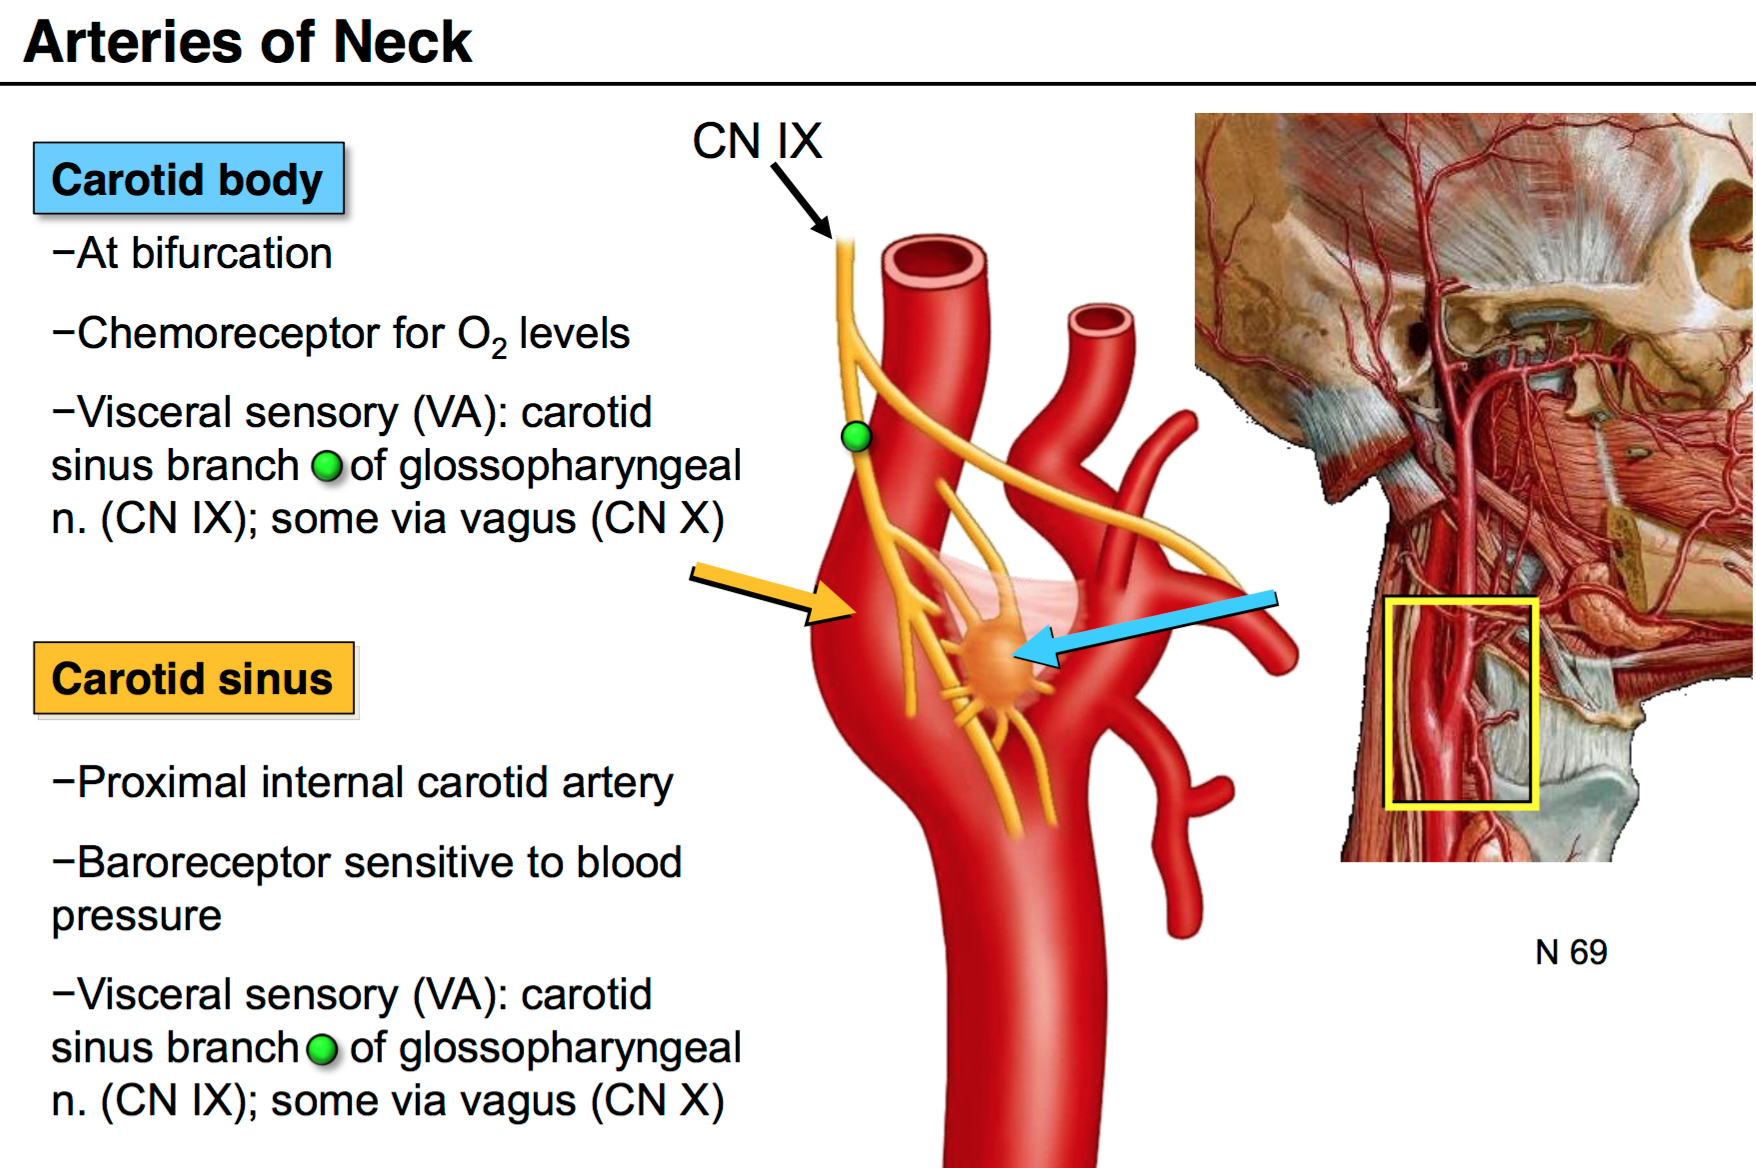 Arteries of neck
Carotid body, carotid sinus